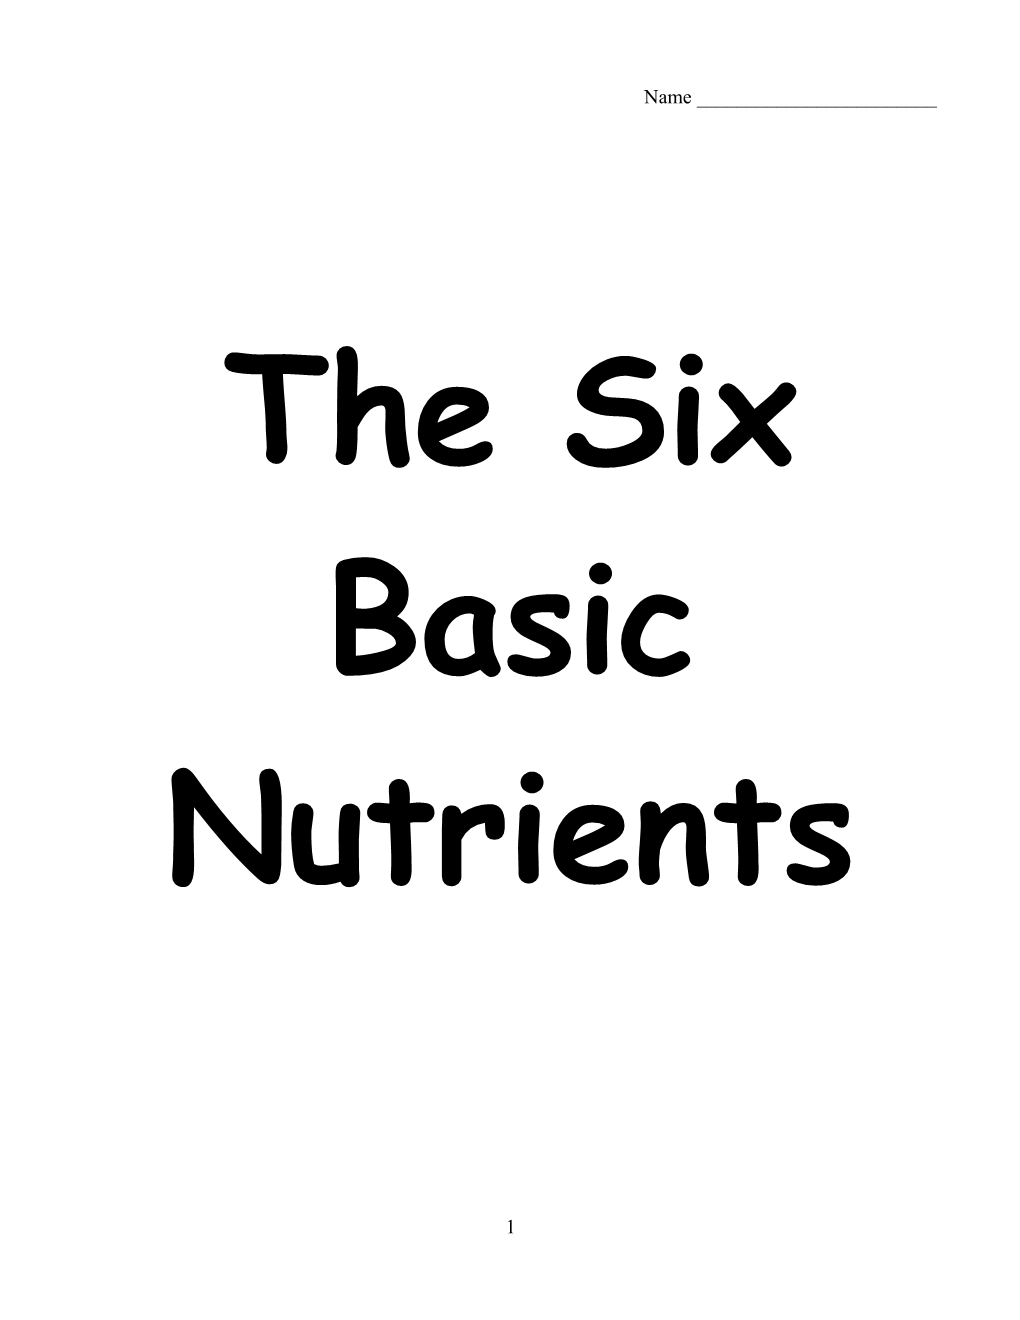 The Six Basic Nutrients